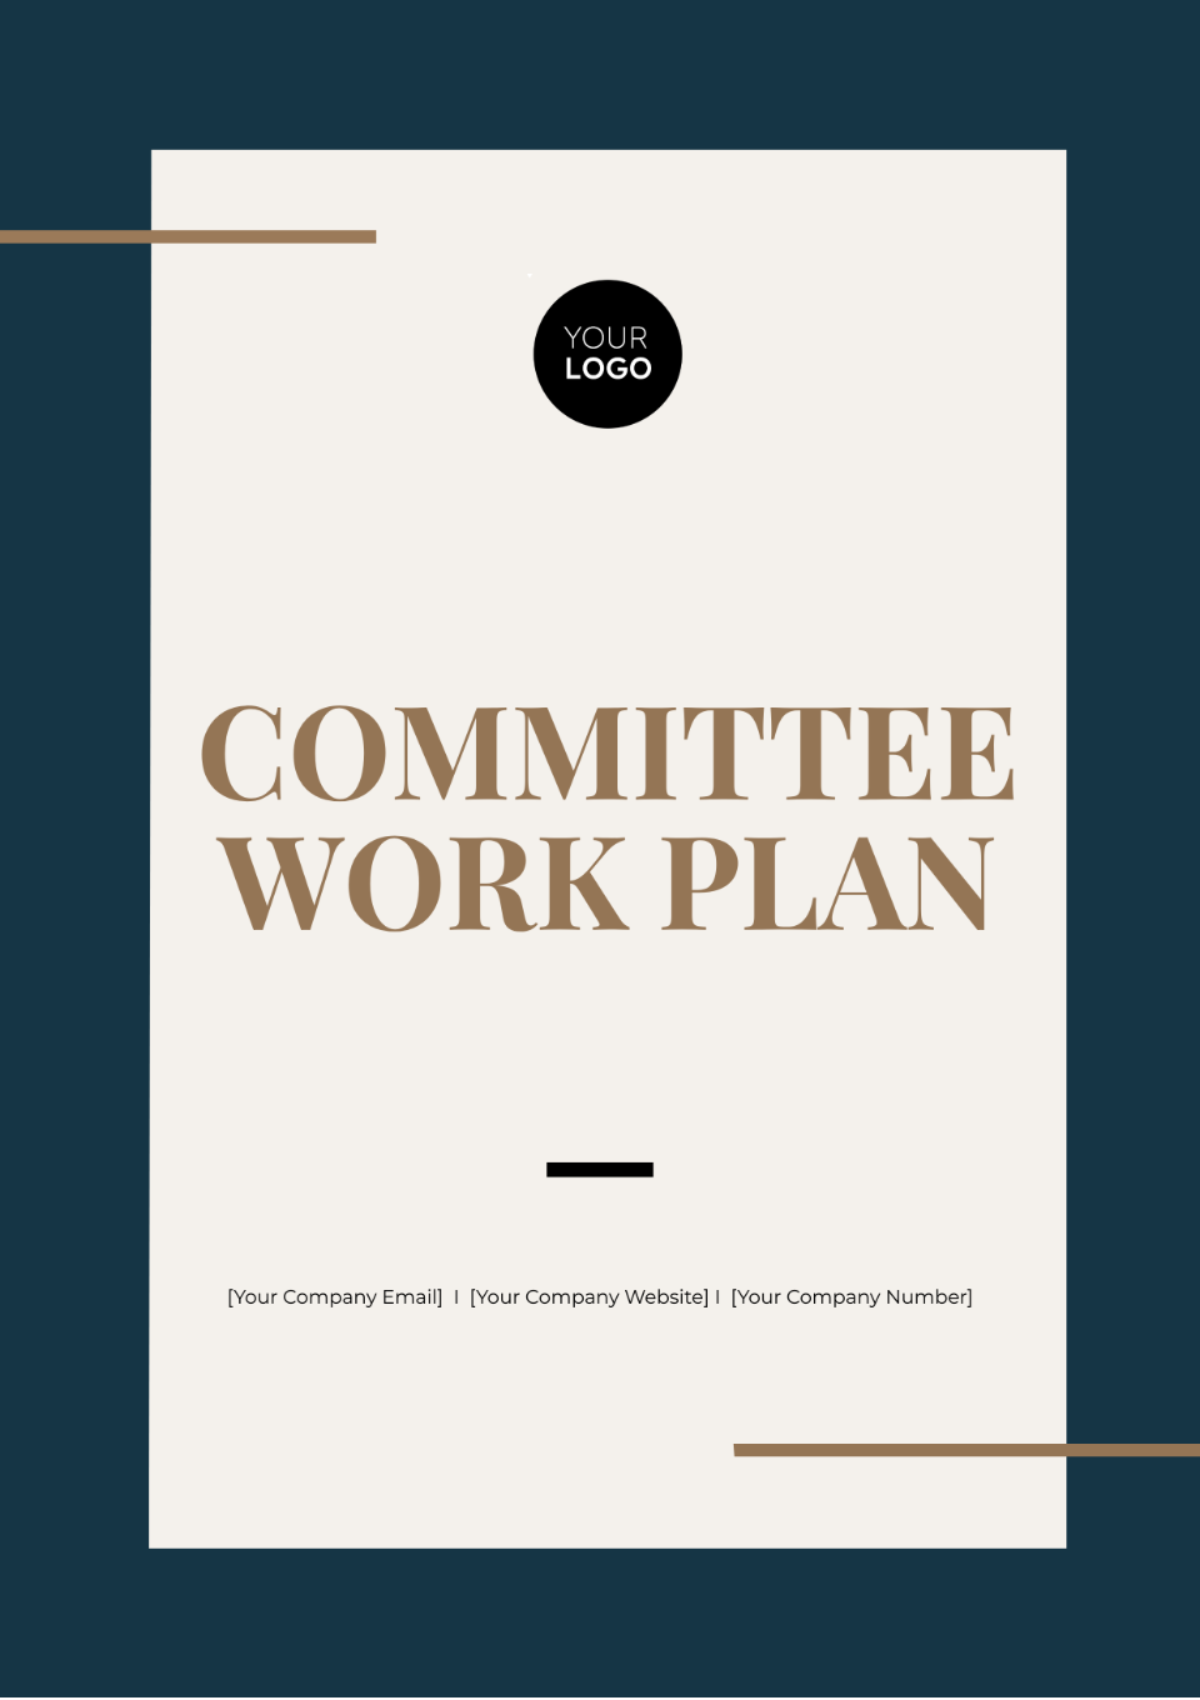 Free Committee Work Plan Template